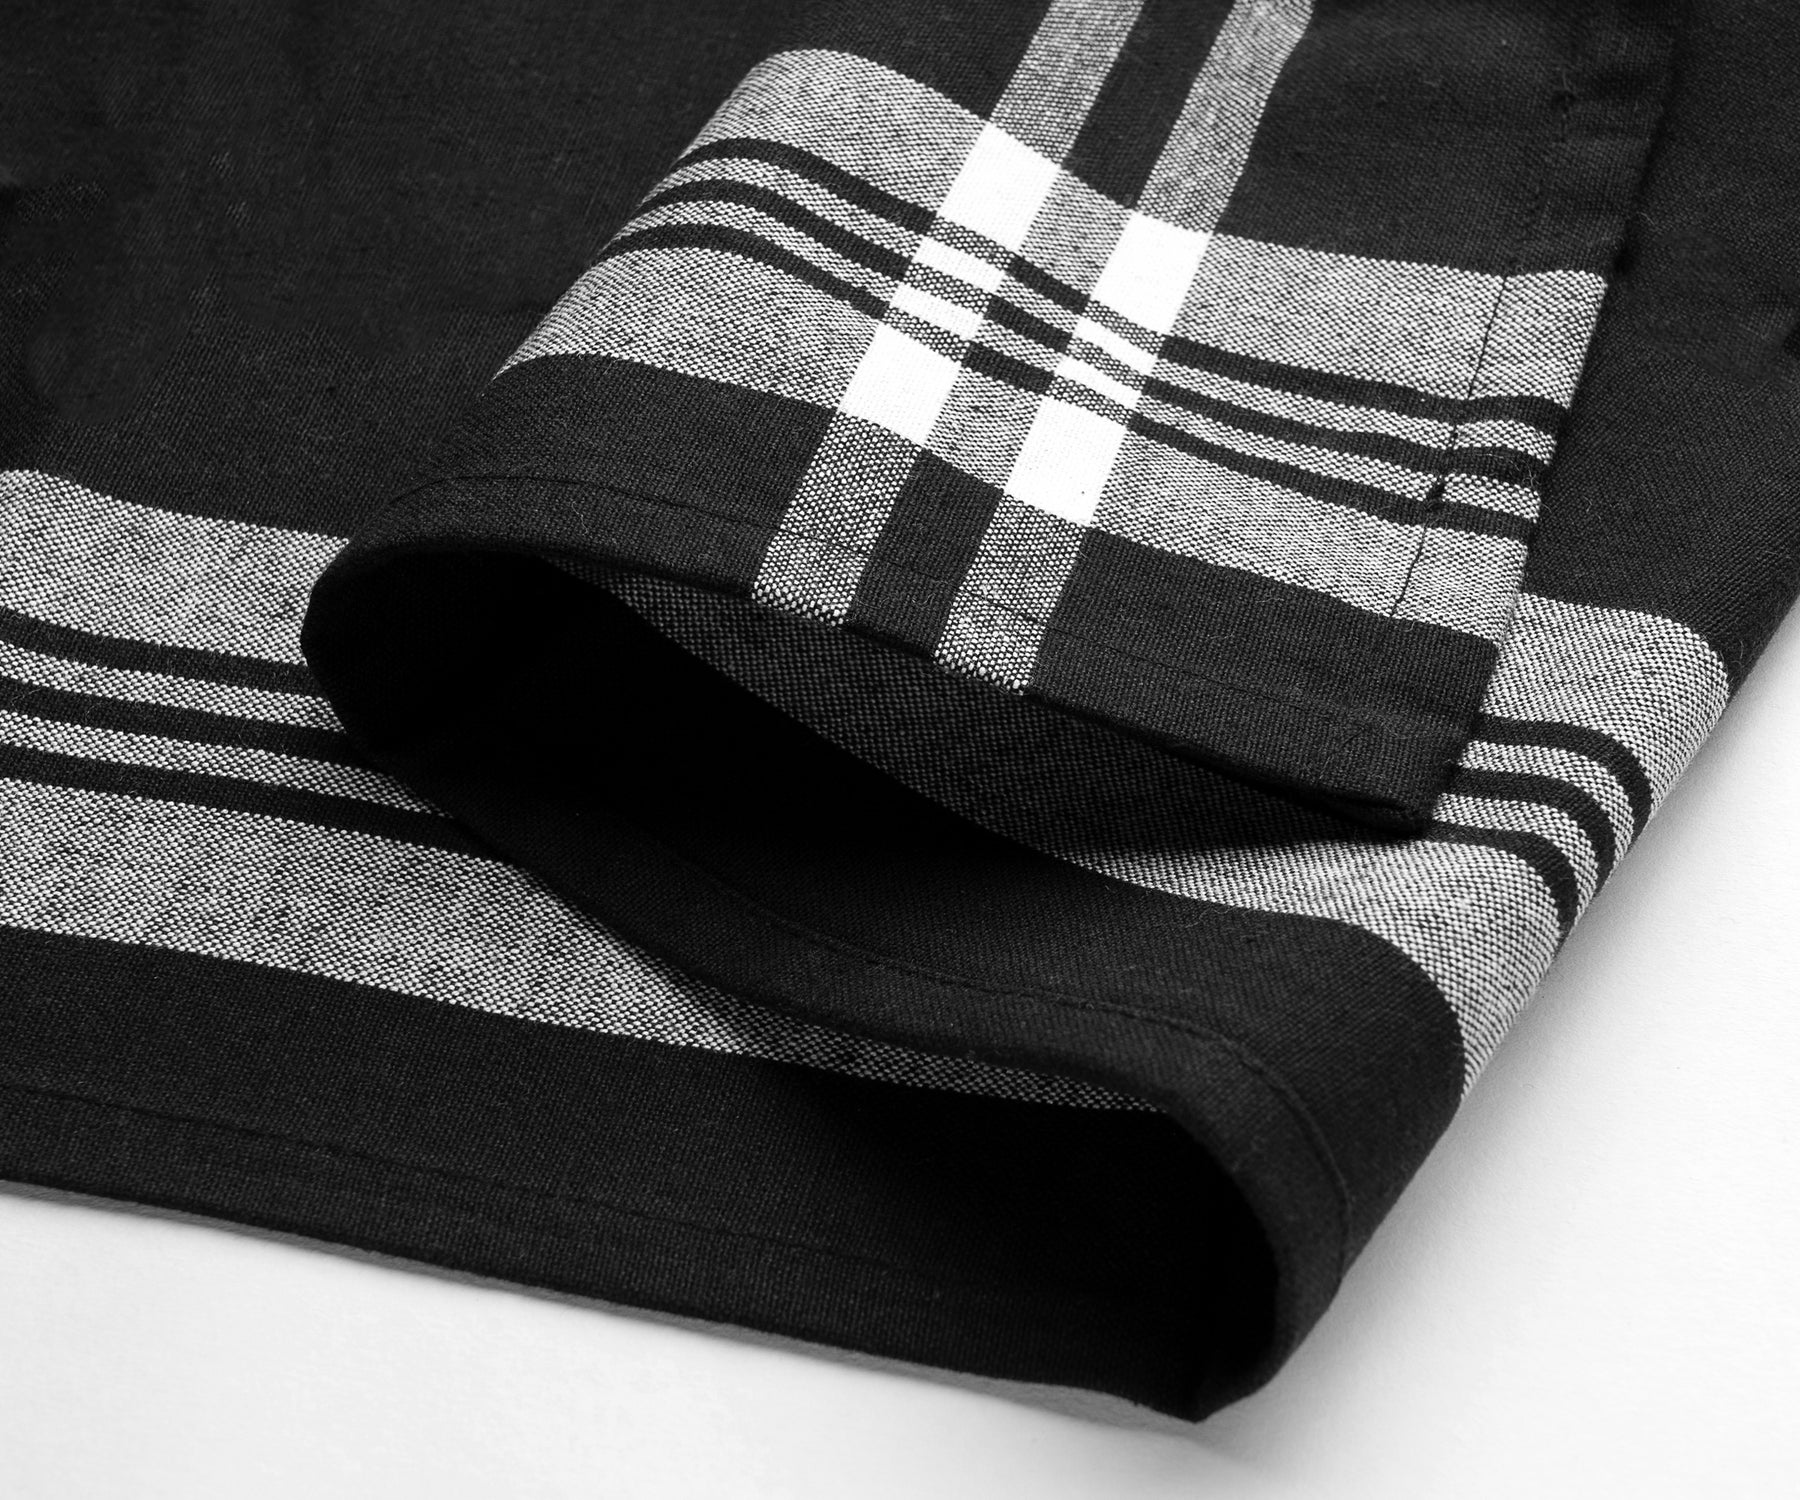 Black and white striped farmhouse kitchen towel with a bold stripe detail